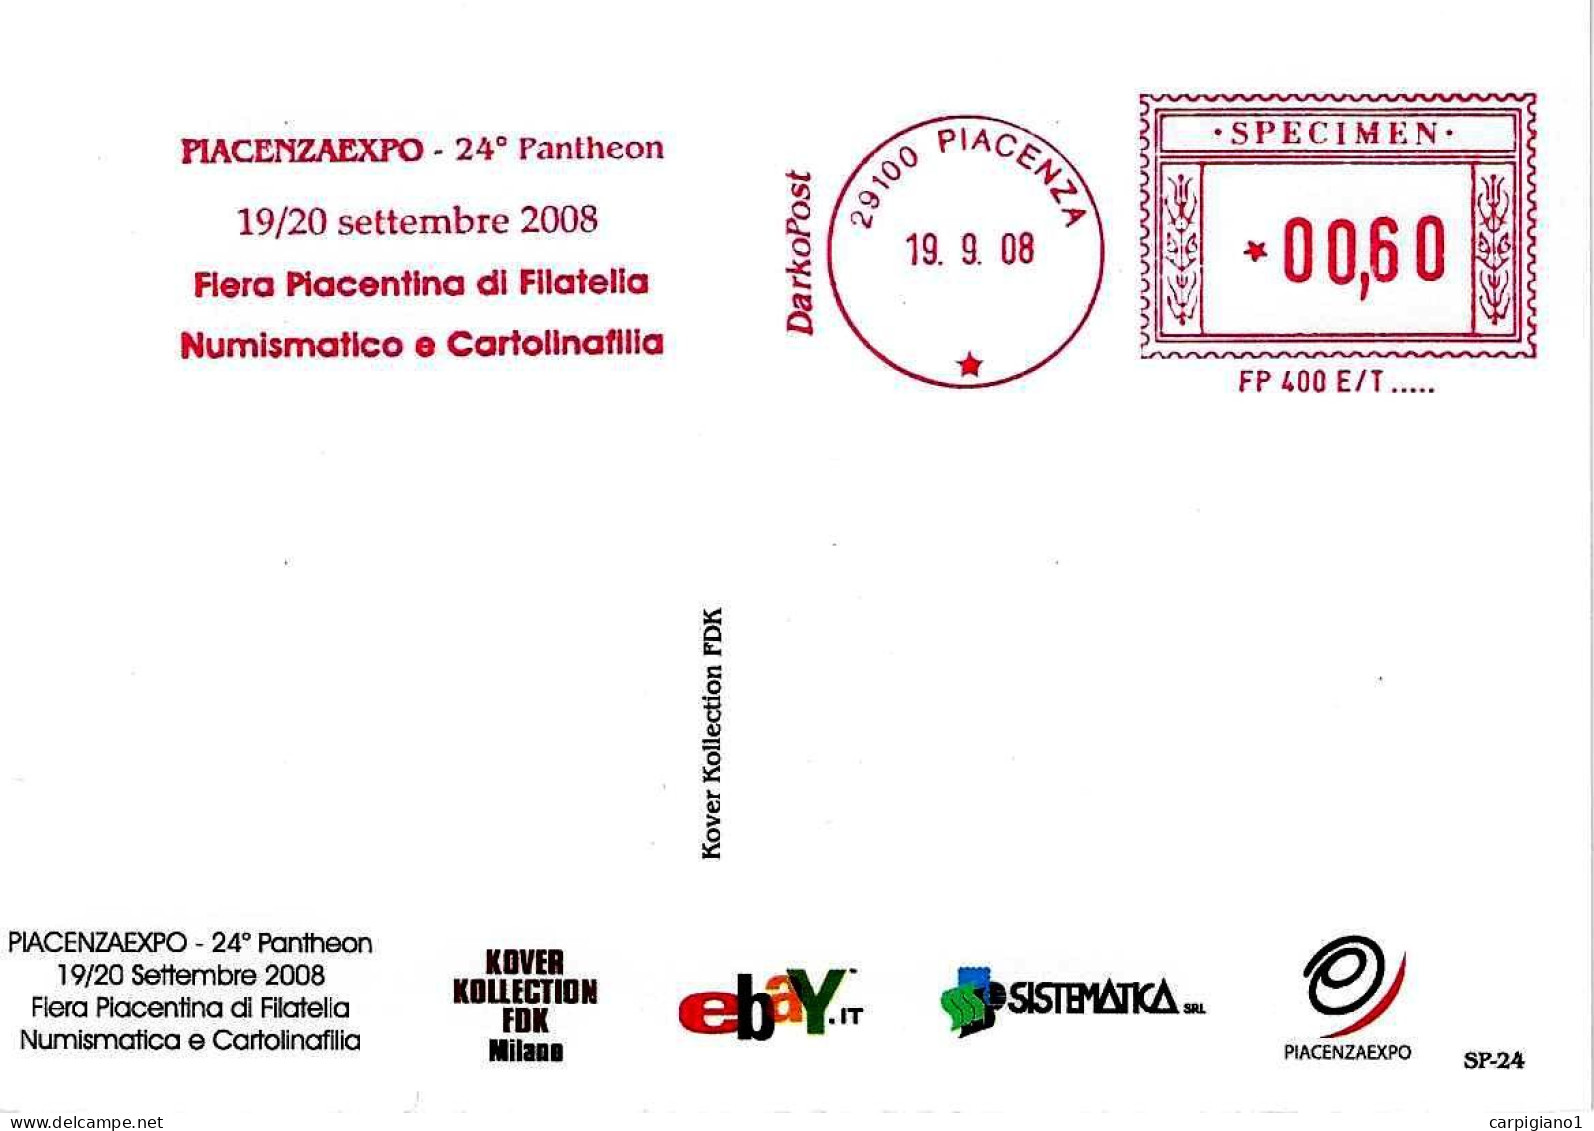 ITALIA - 2008 PIACENZA 24° Pantheon Piacenzaexpo Fiera Filatelia - Ema Affrancatura Mecc. Rossa Red Meter SPECIMEN - 653 - 2001-10: Marcophilia